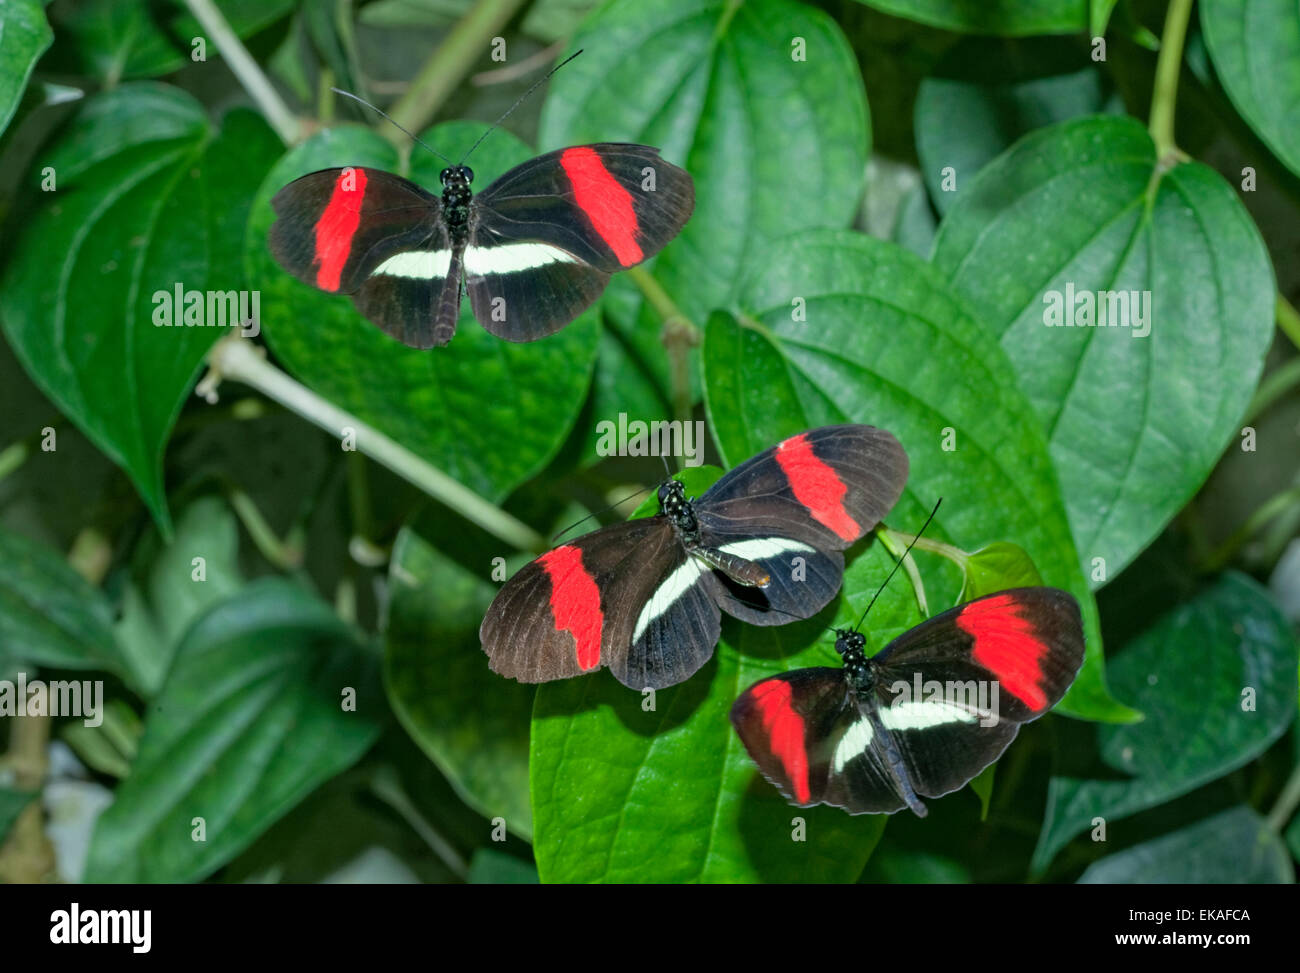 Mating Dance - Postman Butterflies - Common Postman - Heliconius melpomene rosina - Central America Stock Photo